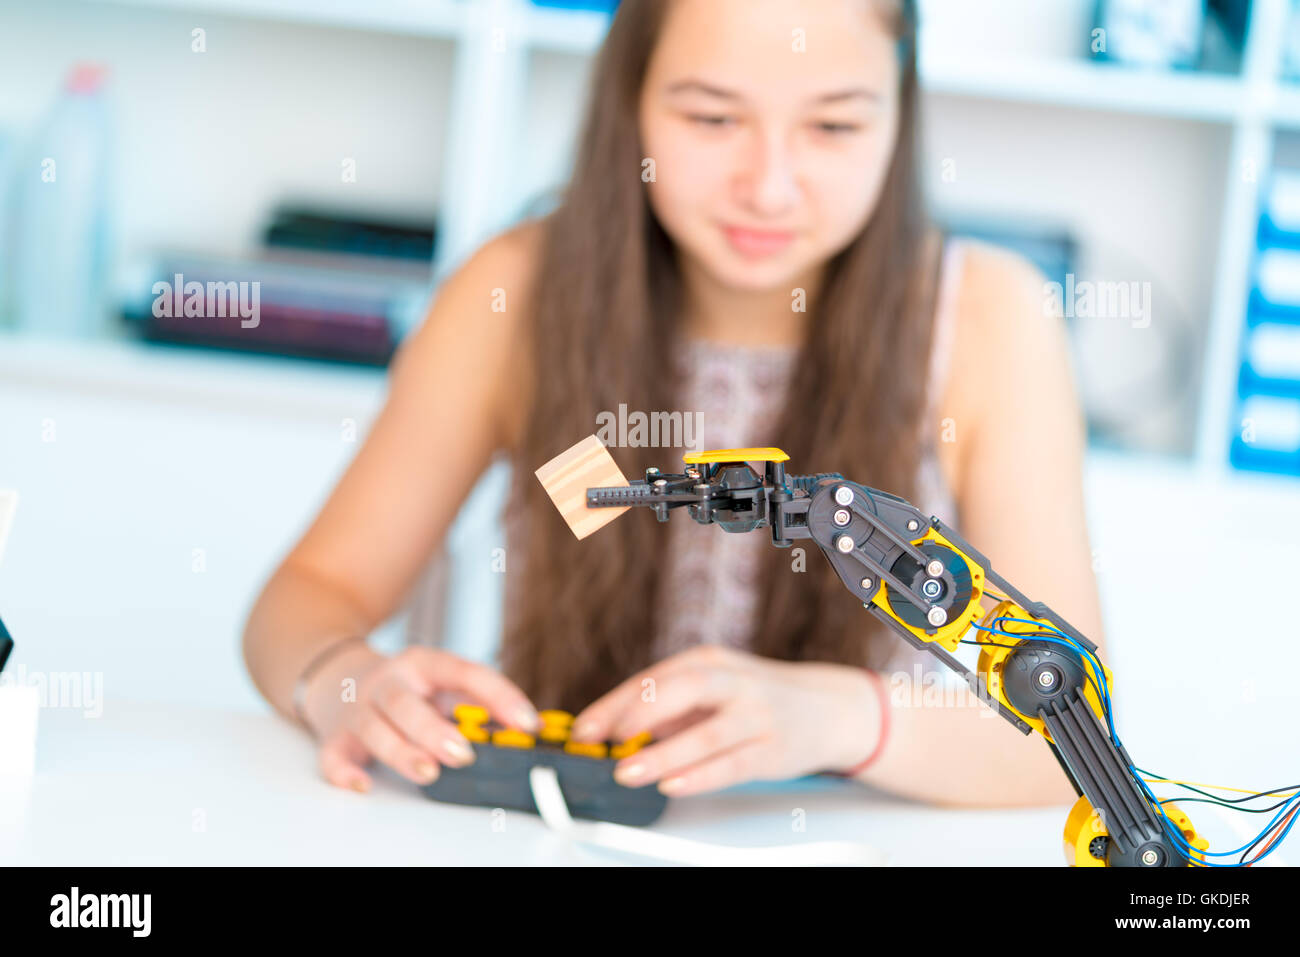 Teen girl in robotics laboratory Stock Photo